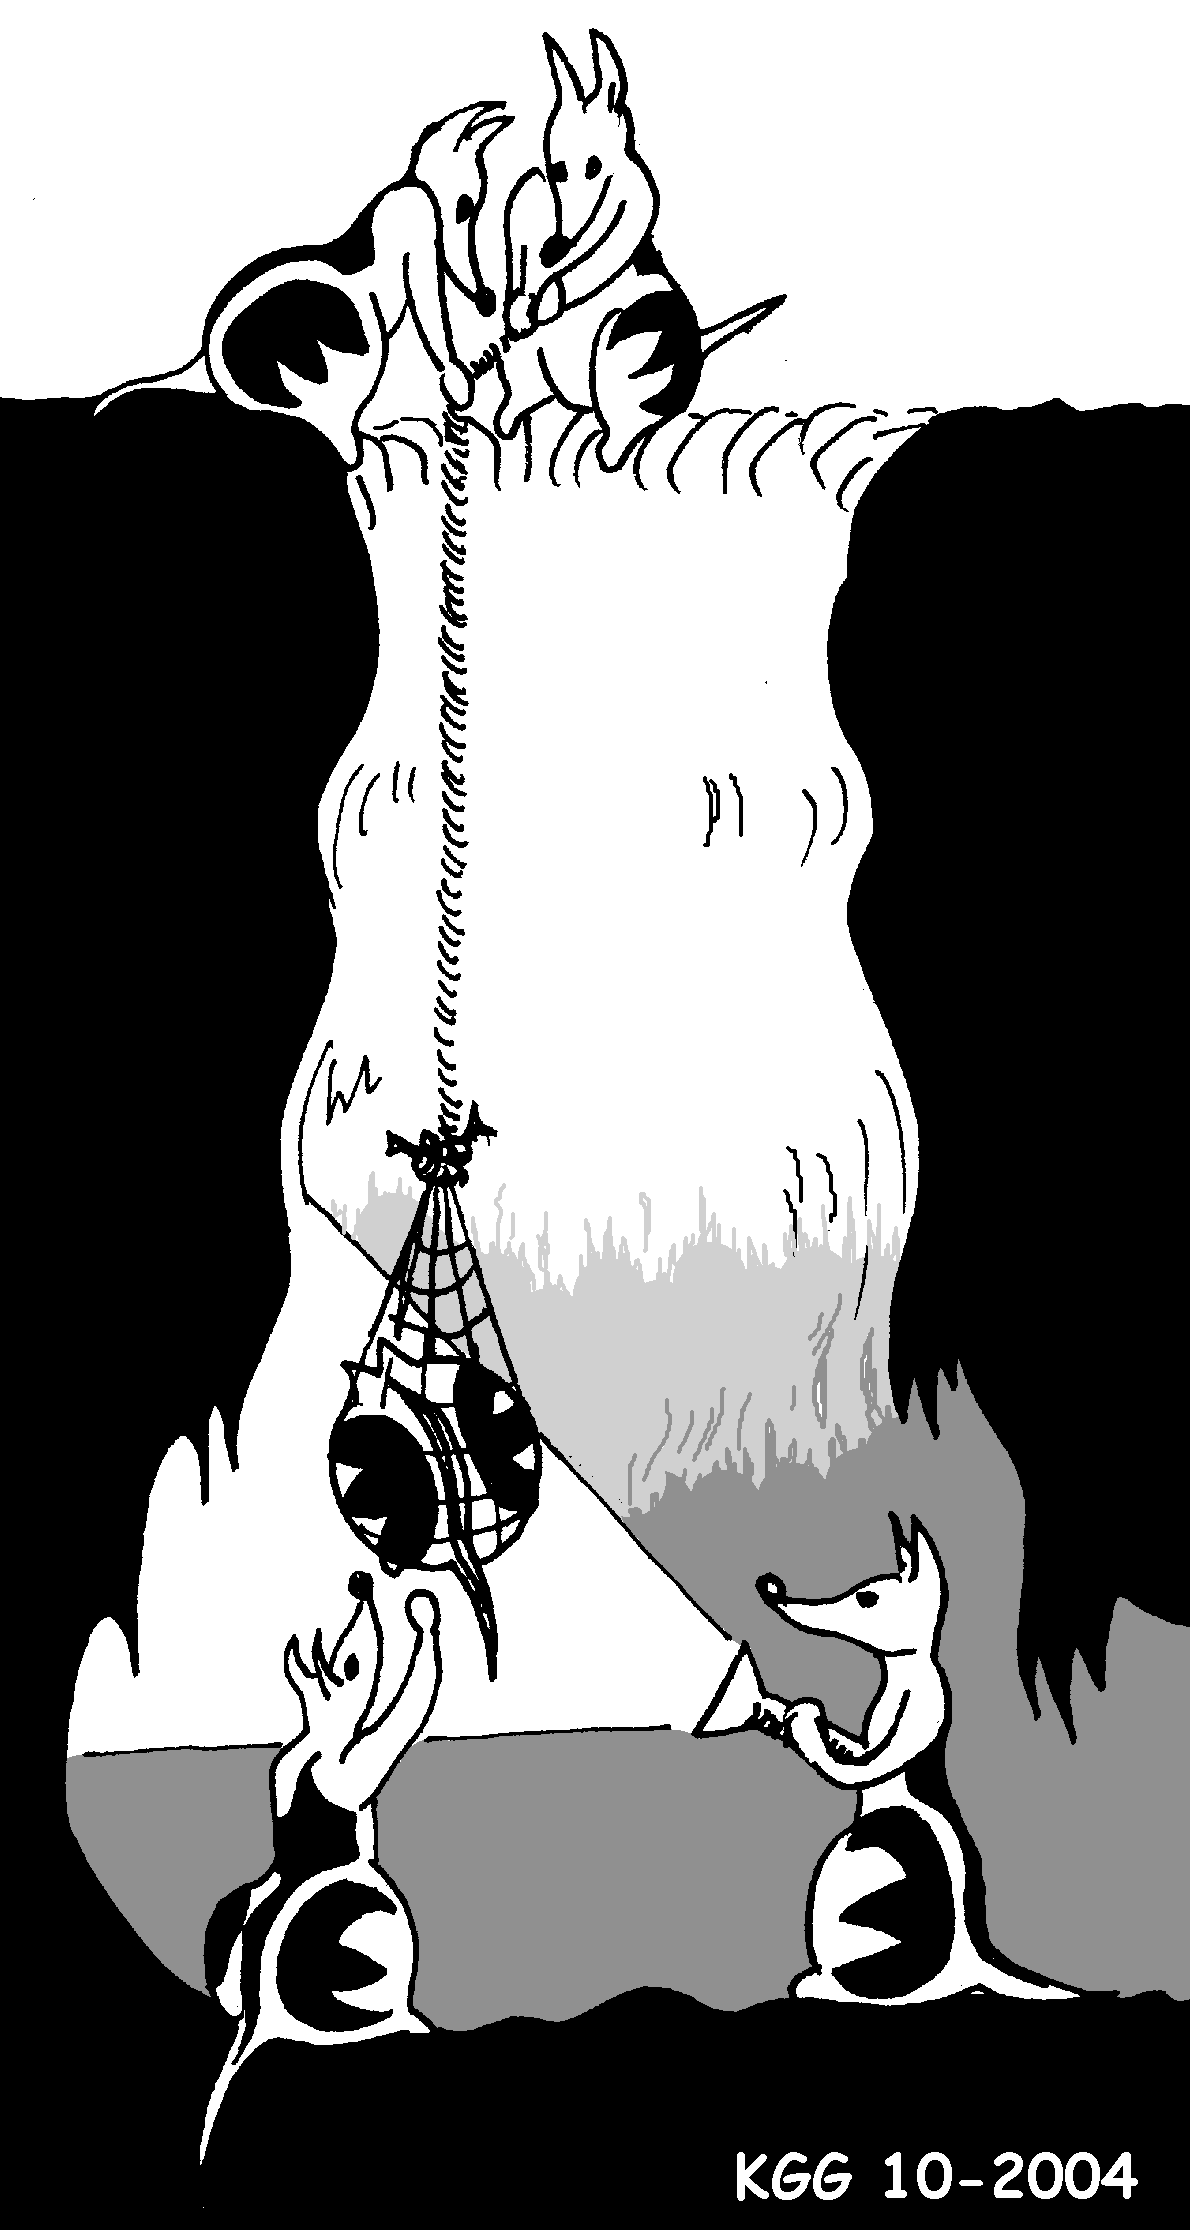 Bandicoots descending into cave